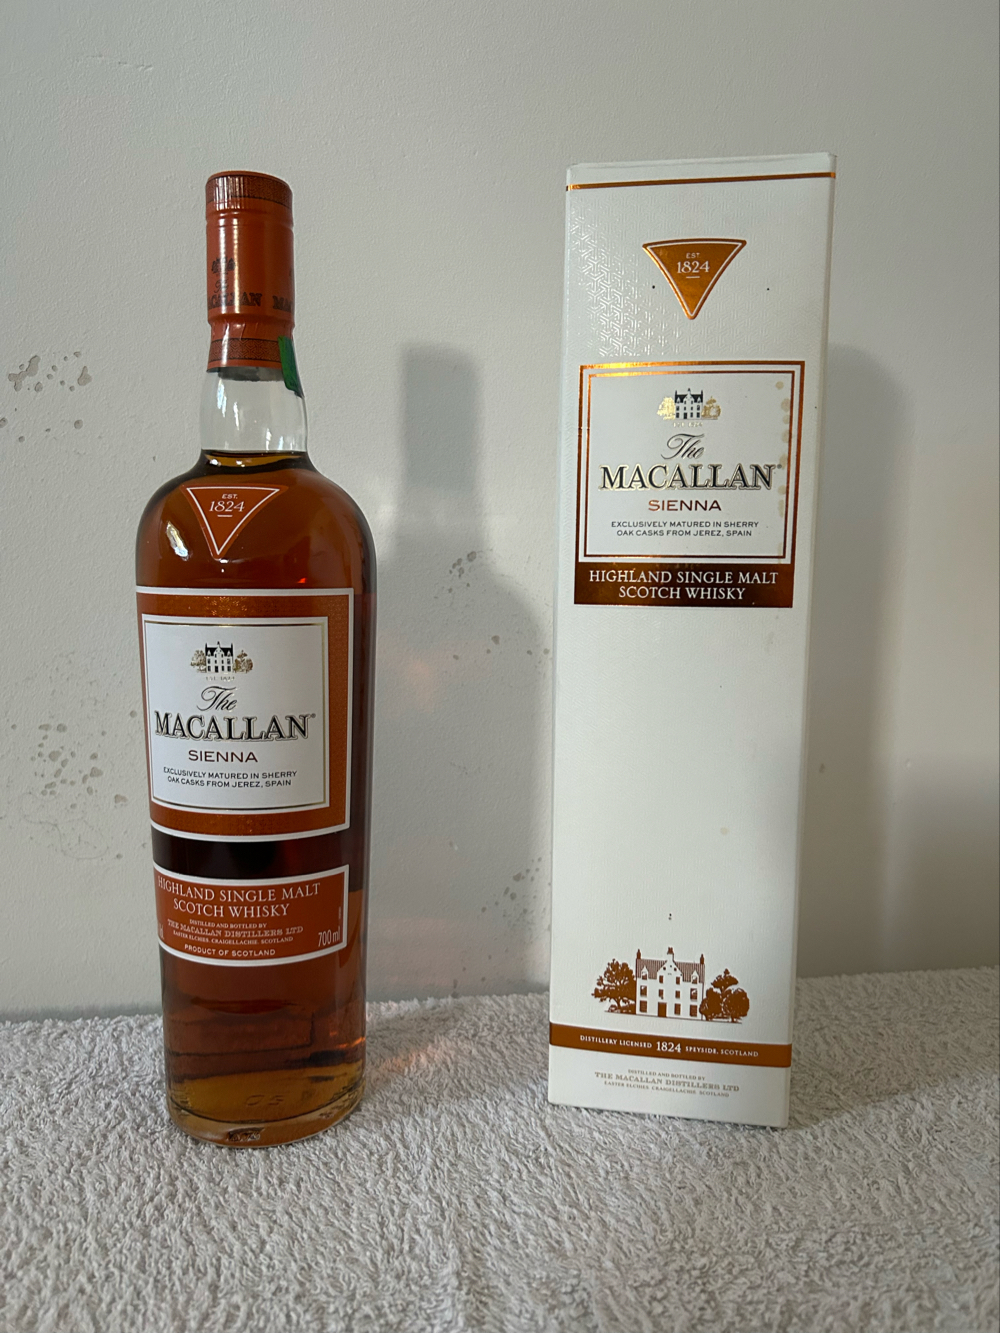 Whisky Macallan Sienna 1824 Sherryfass Lagerung